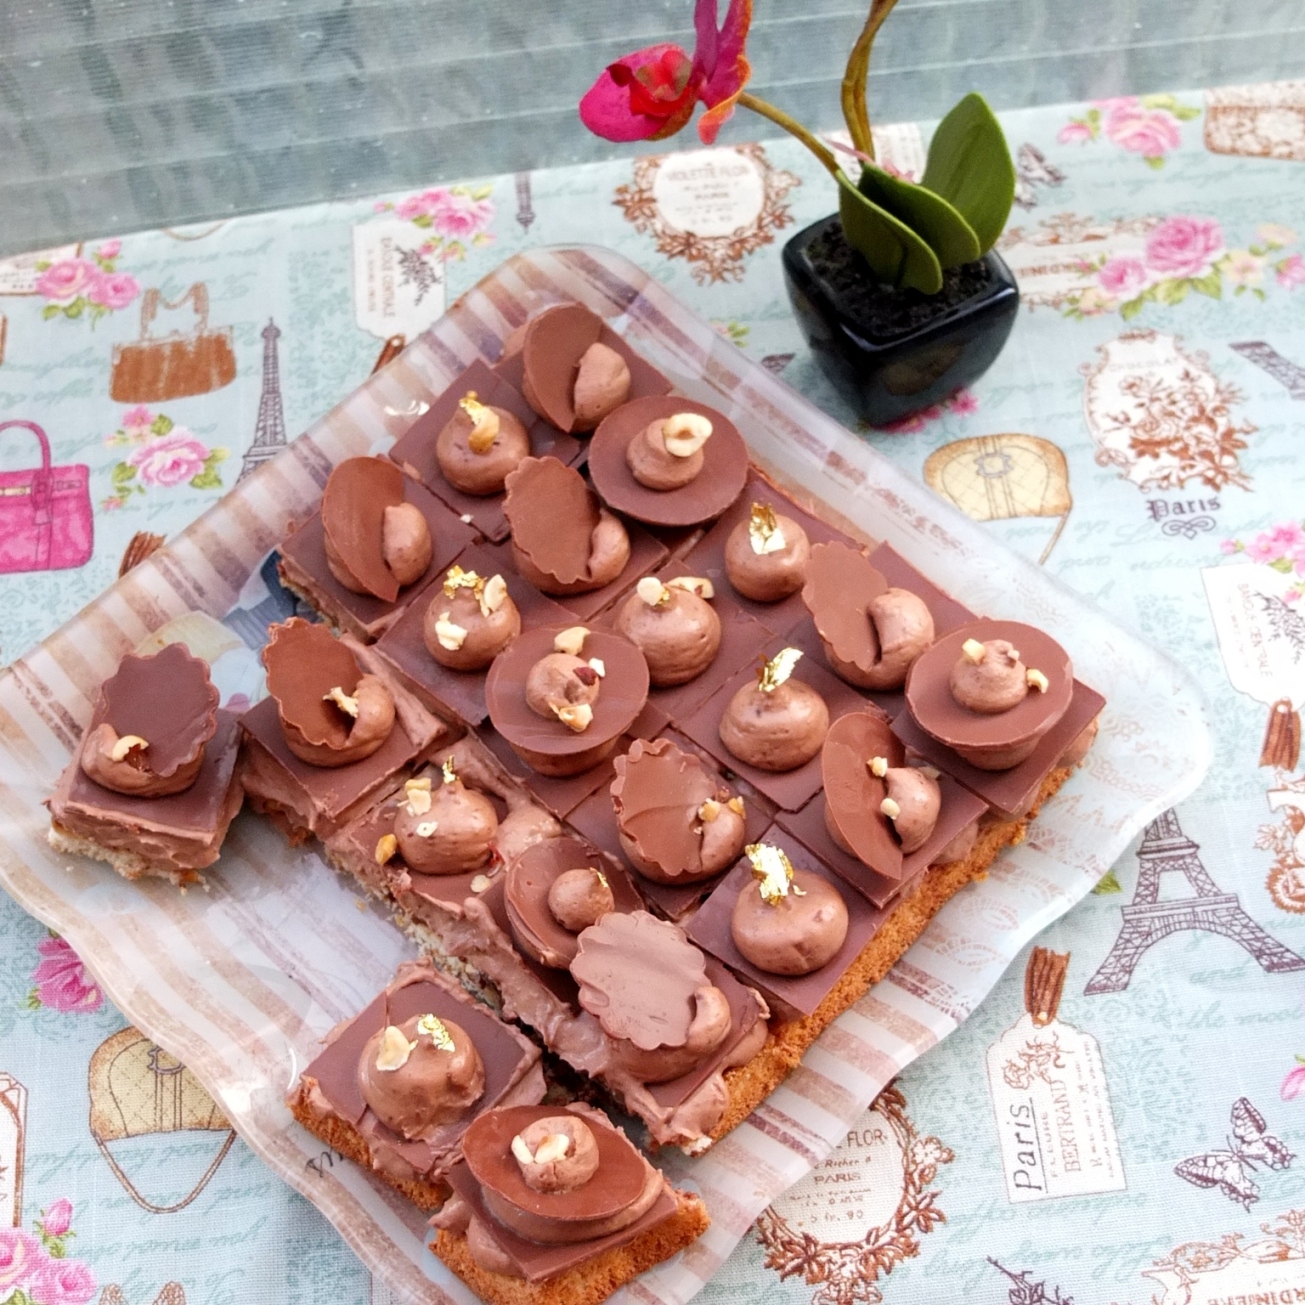 Dreamy chocolate hazelnut dacquoise mini cakes